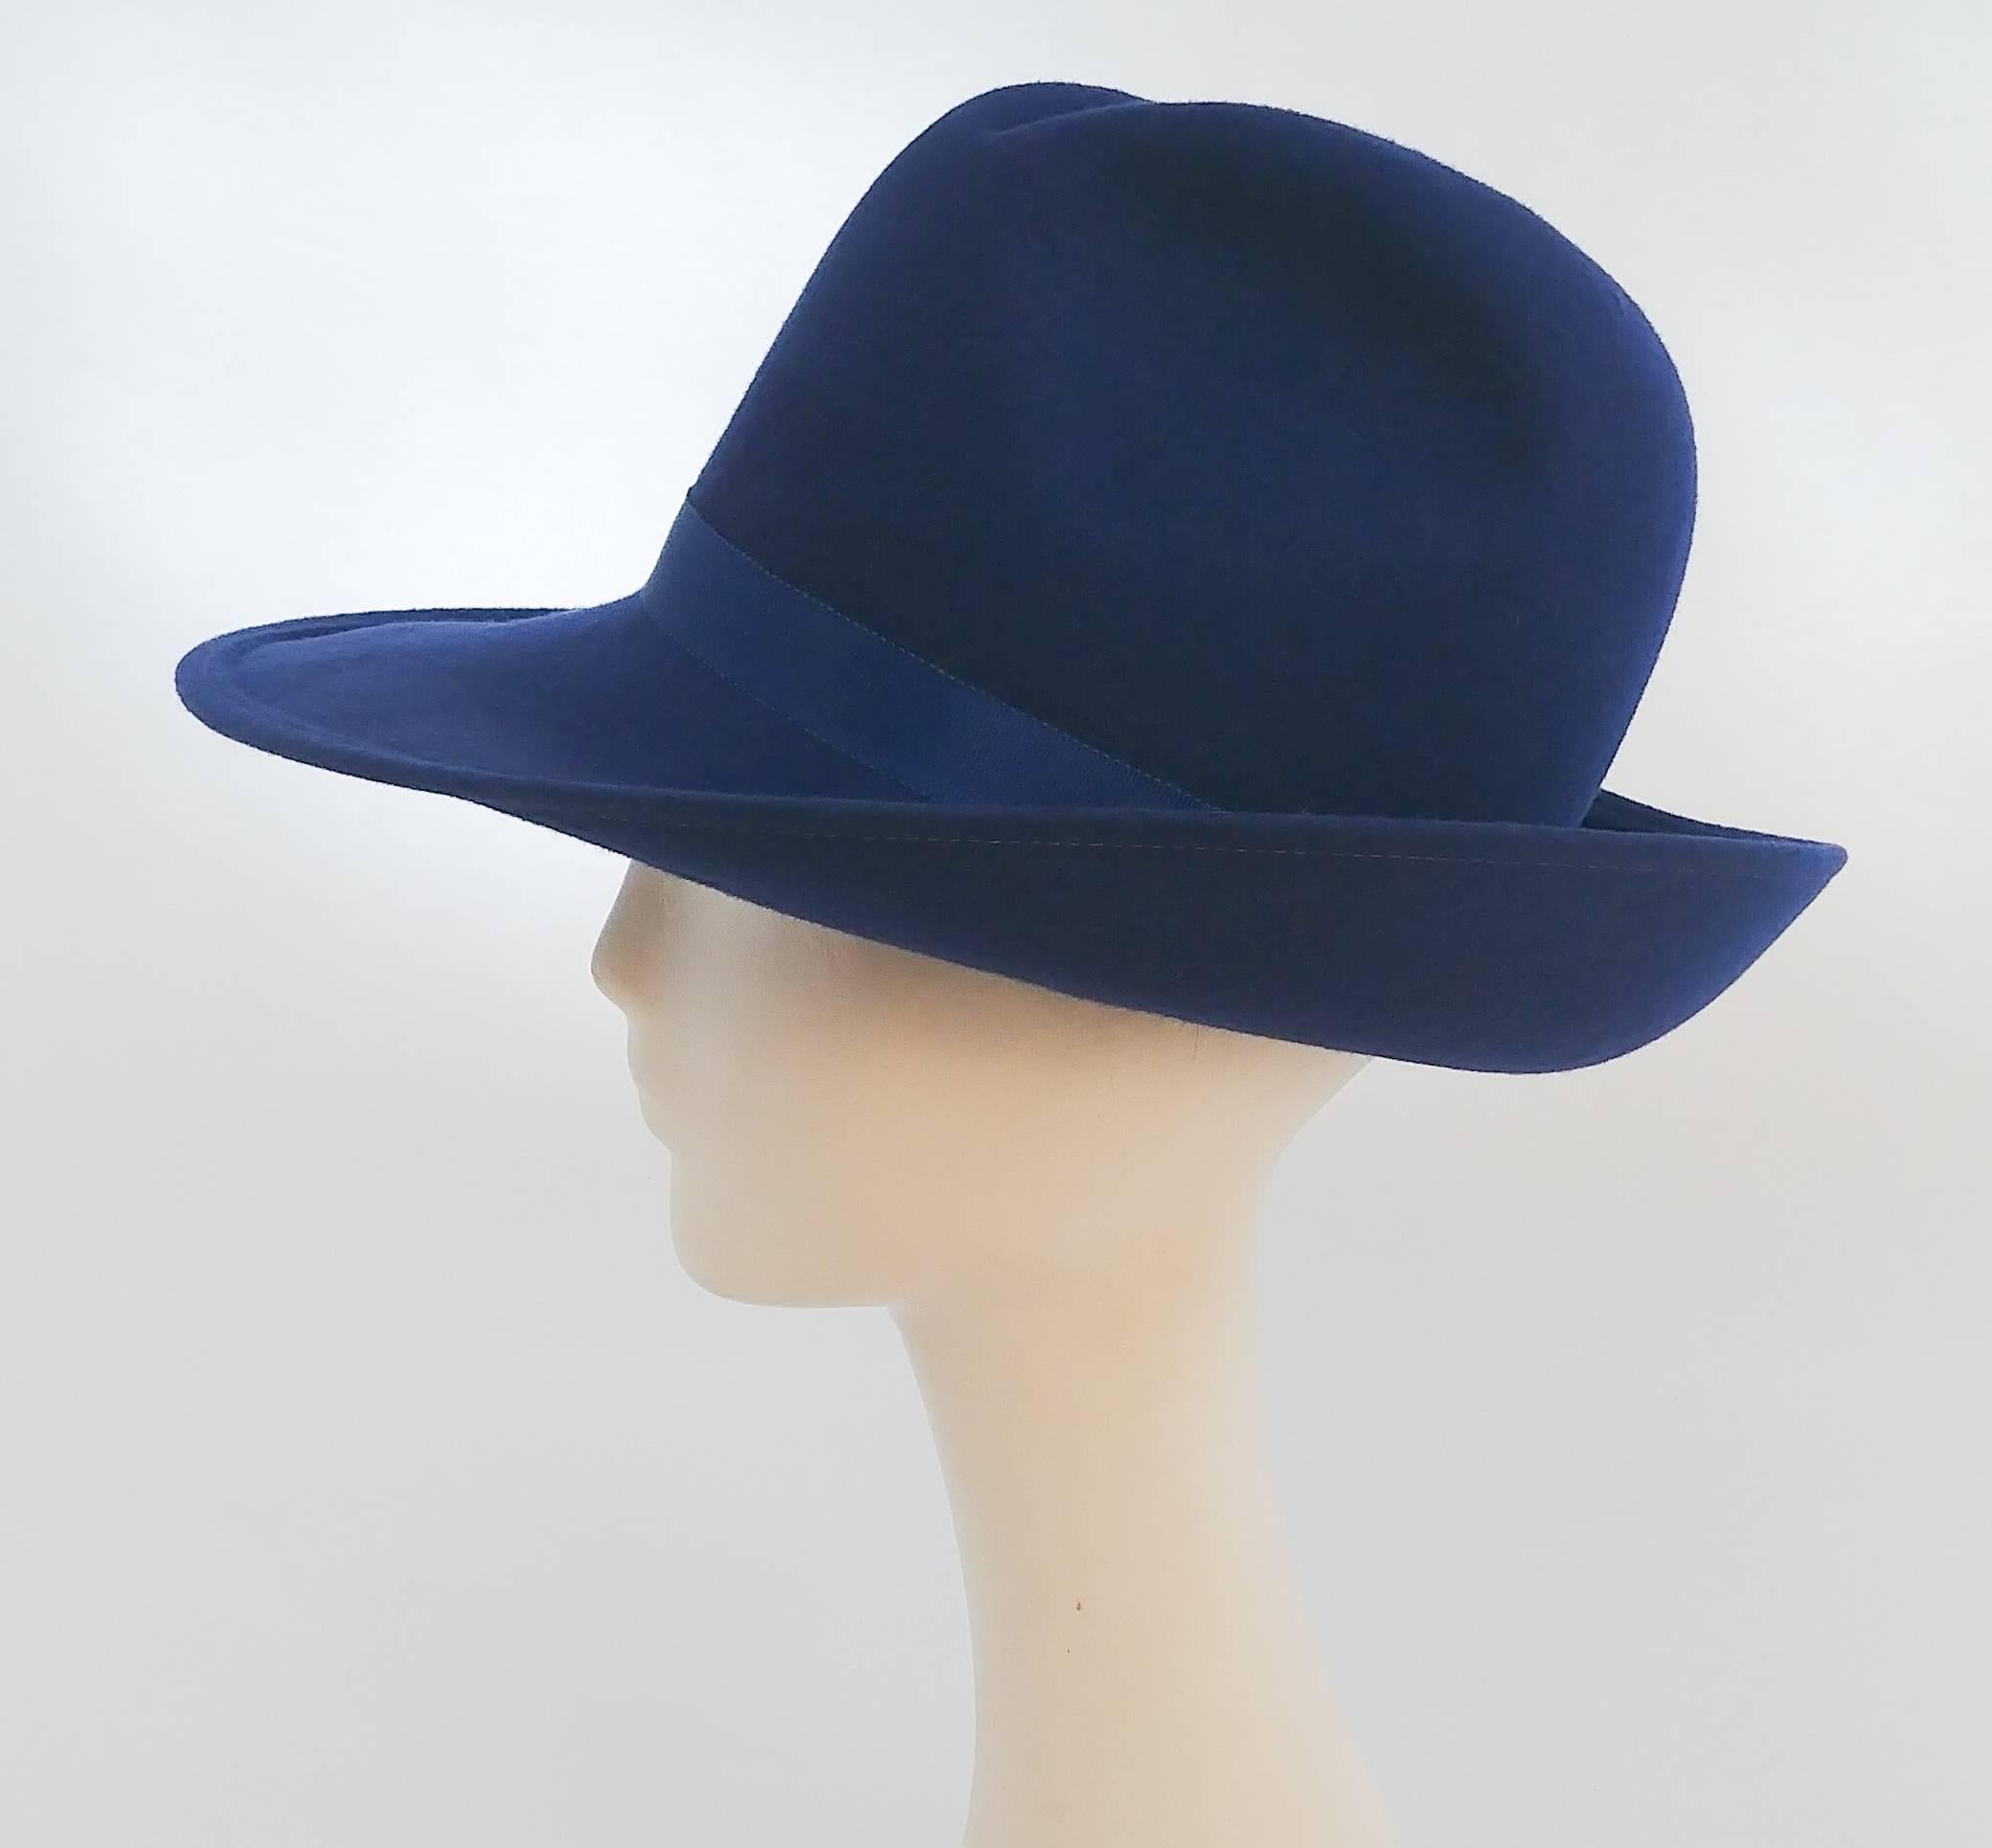 1980s Cobalt Blue Wide Brim Fedora. Side of brim flips up. Bright red inner hat band makes for striking contrast. 